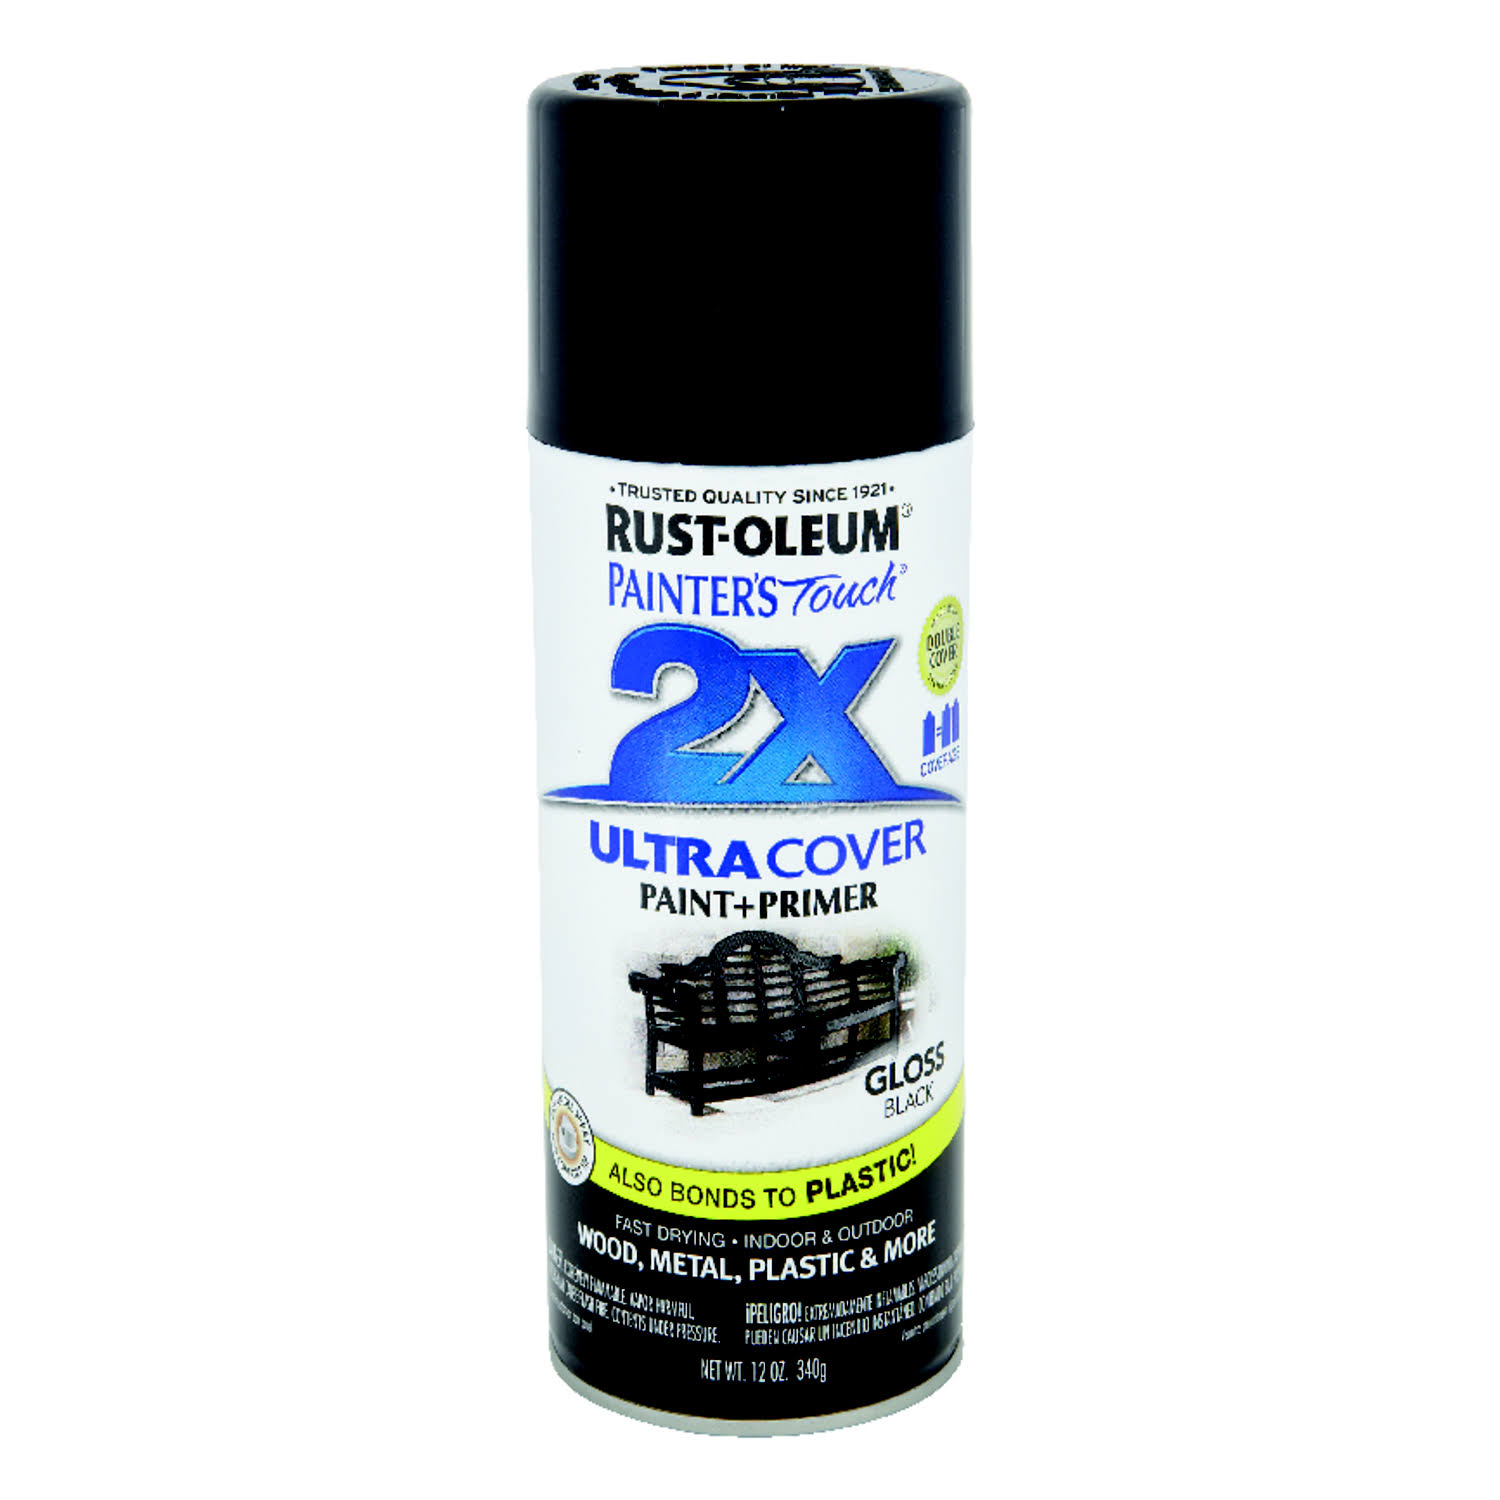 RUST-OLEUM PAINTER'S Touch 249122 Gloss Spray Paint, Gloss, Black, 12 oz, Aerosol Can